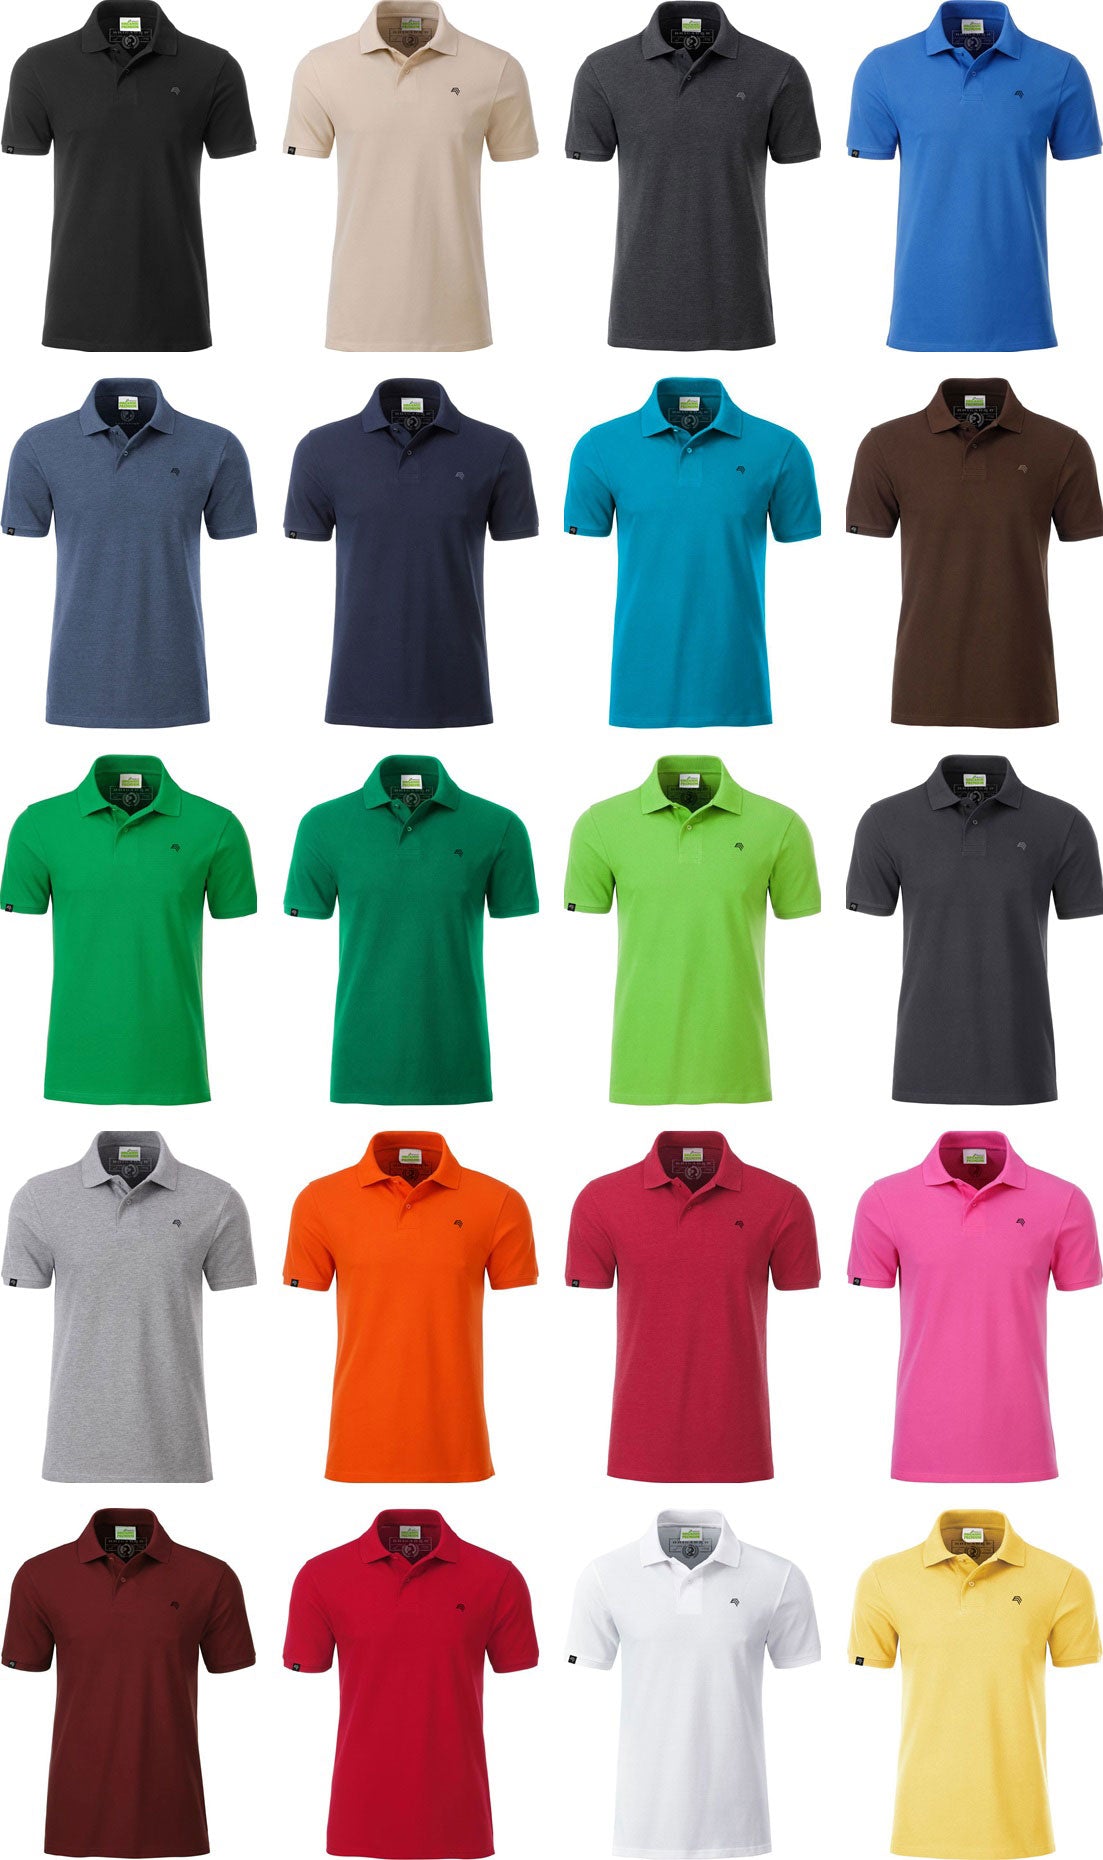 JAN 8010 ― Herren Bio-Baumwolle Polo Shirt - Pink